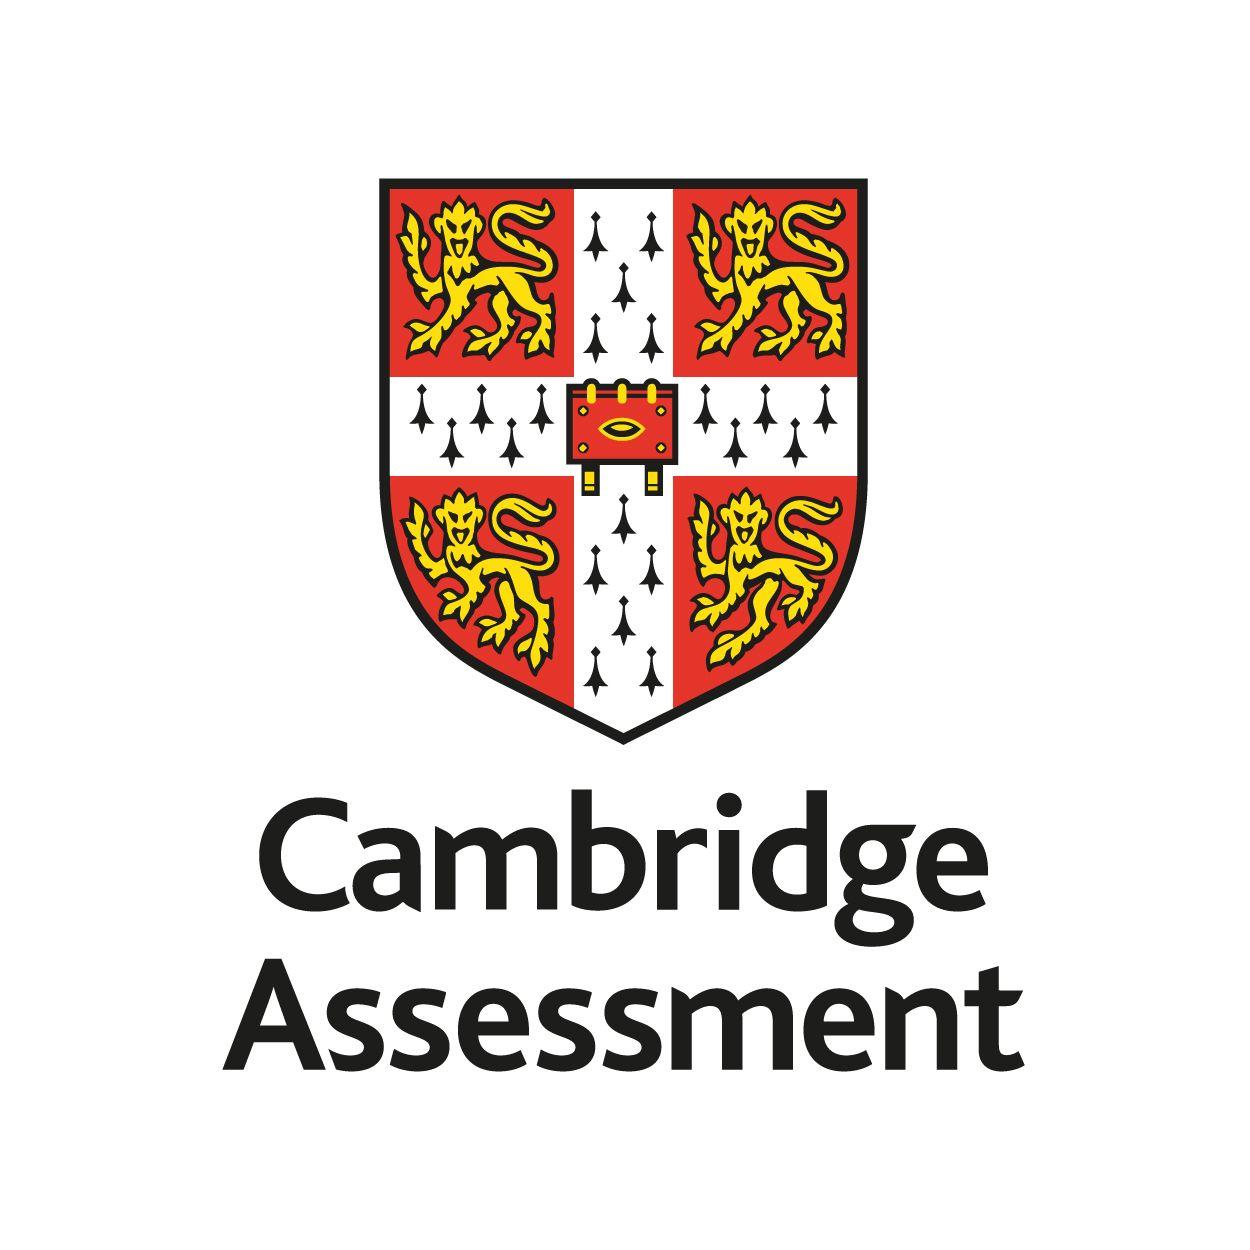 Cambridge Logo - Cambridge Assessment